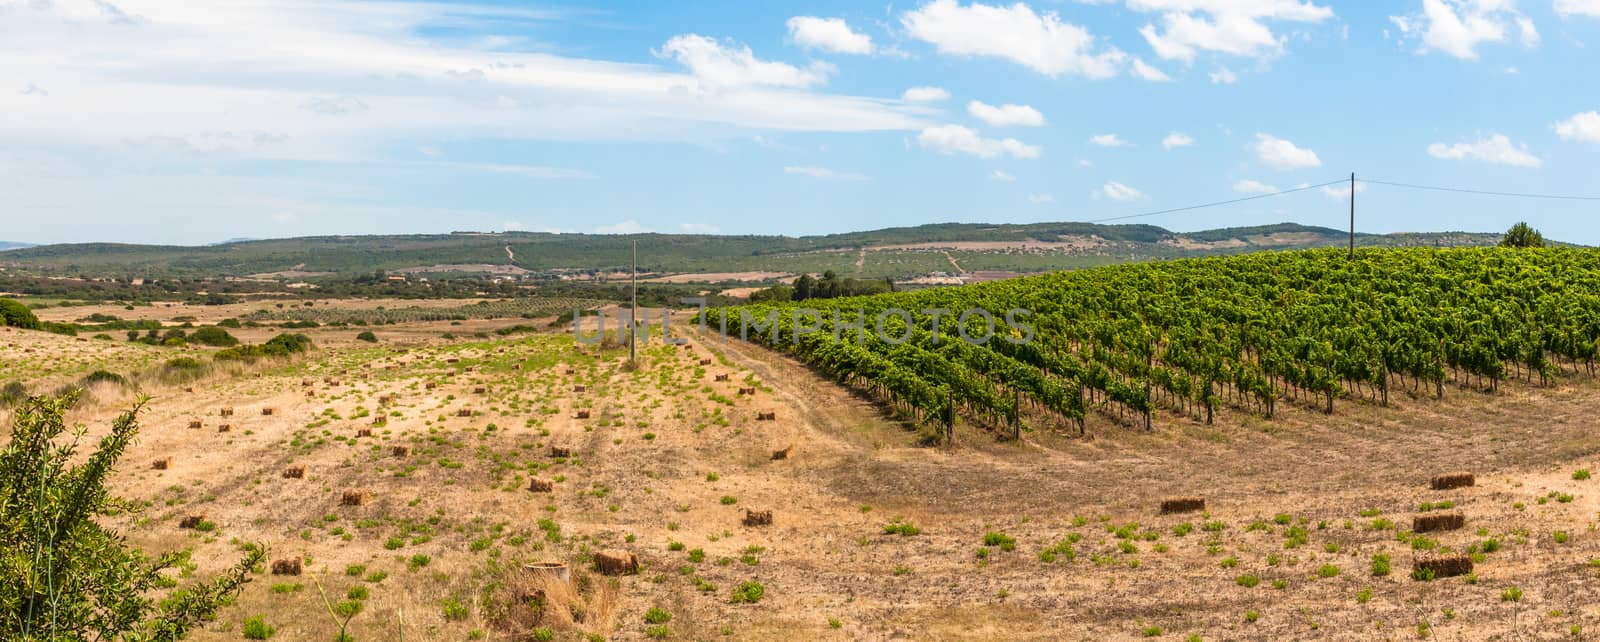 Vineyard in a sunny day of summer in sardinia